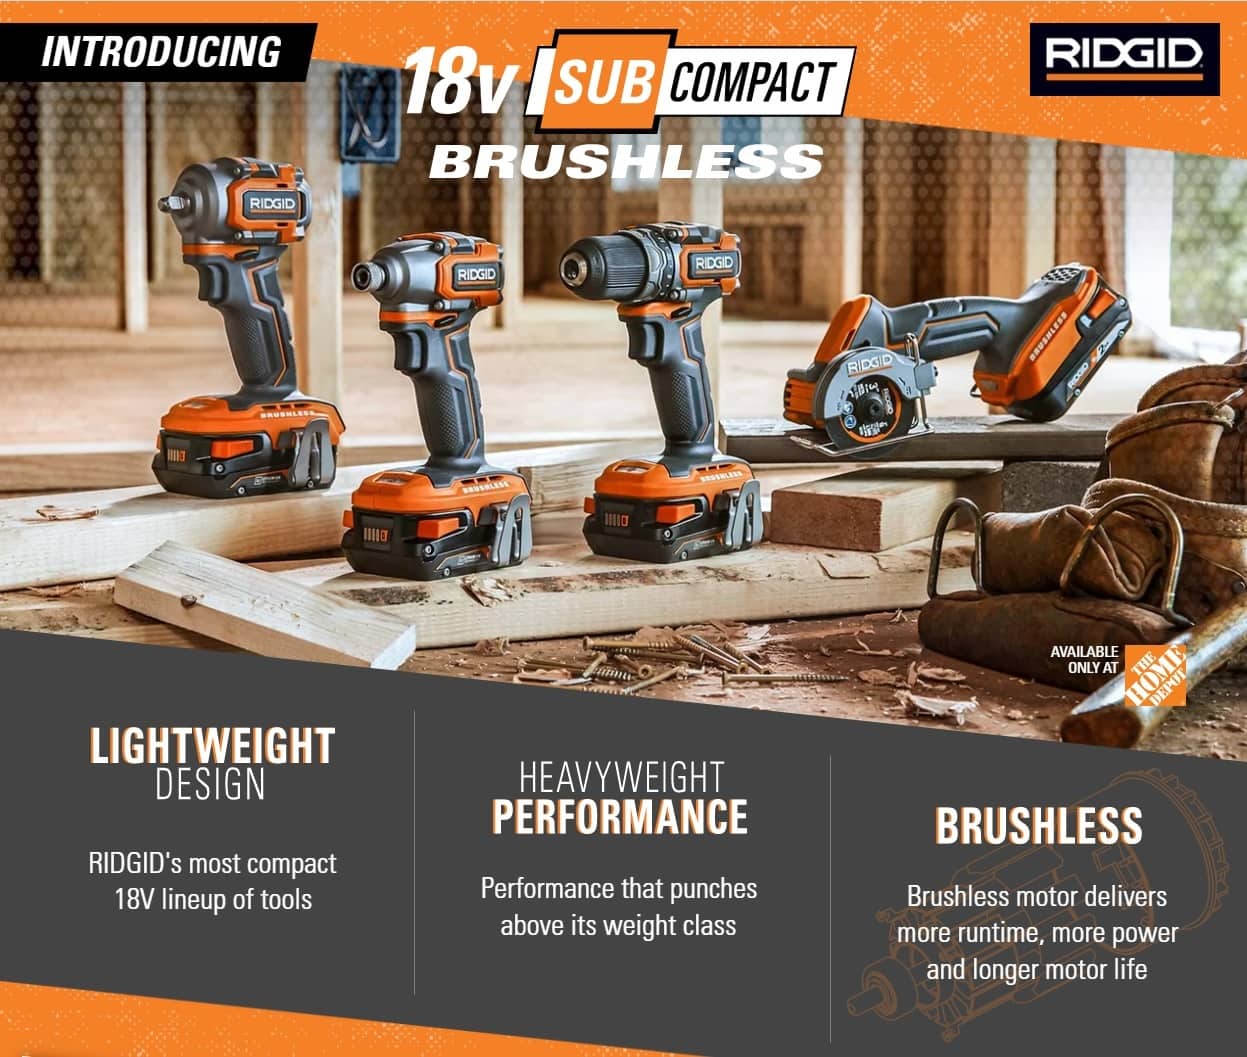 Ridgid 18V Subcompact Brushless Power Tools – They’re Tiny!